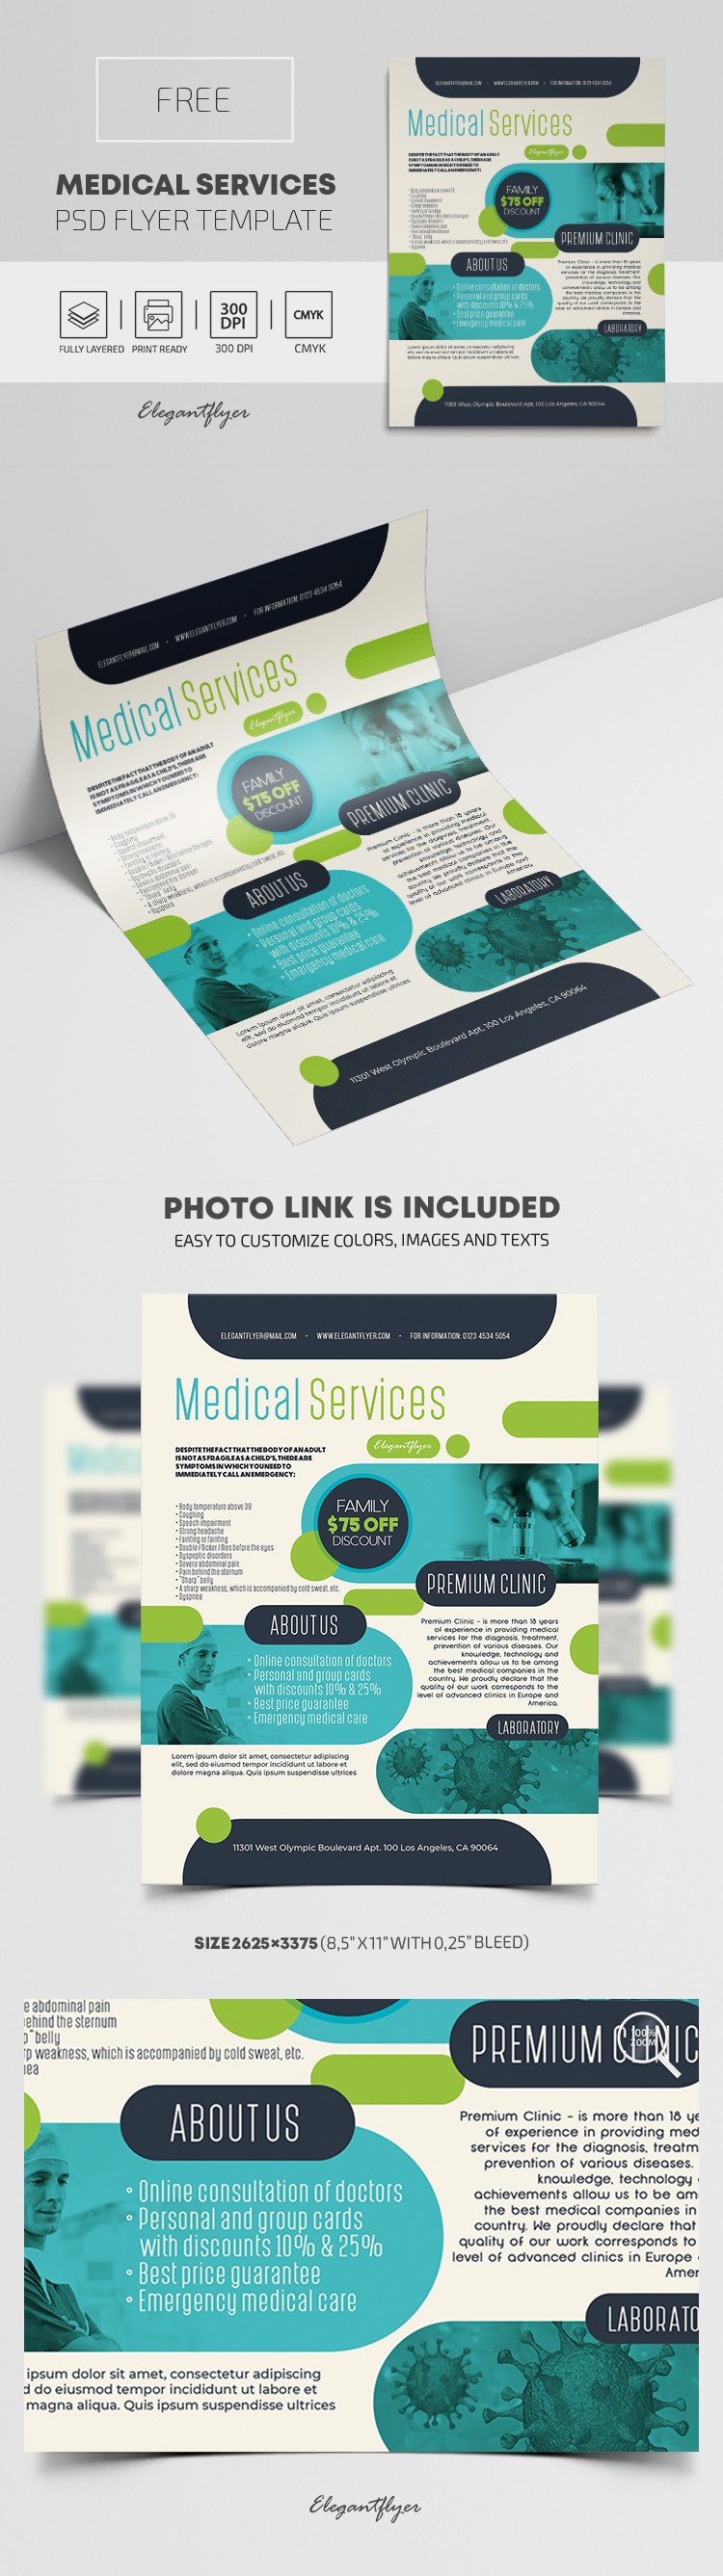 Medical Services Flyer by ElegantFlyer